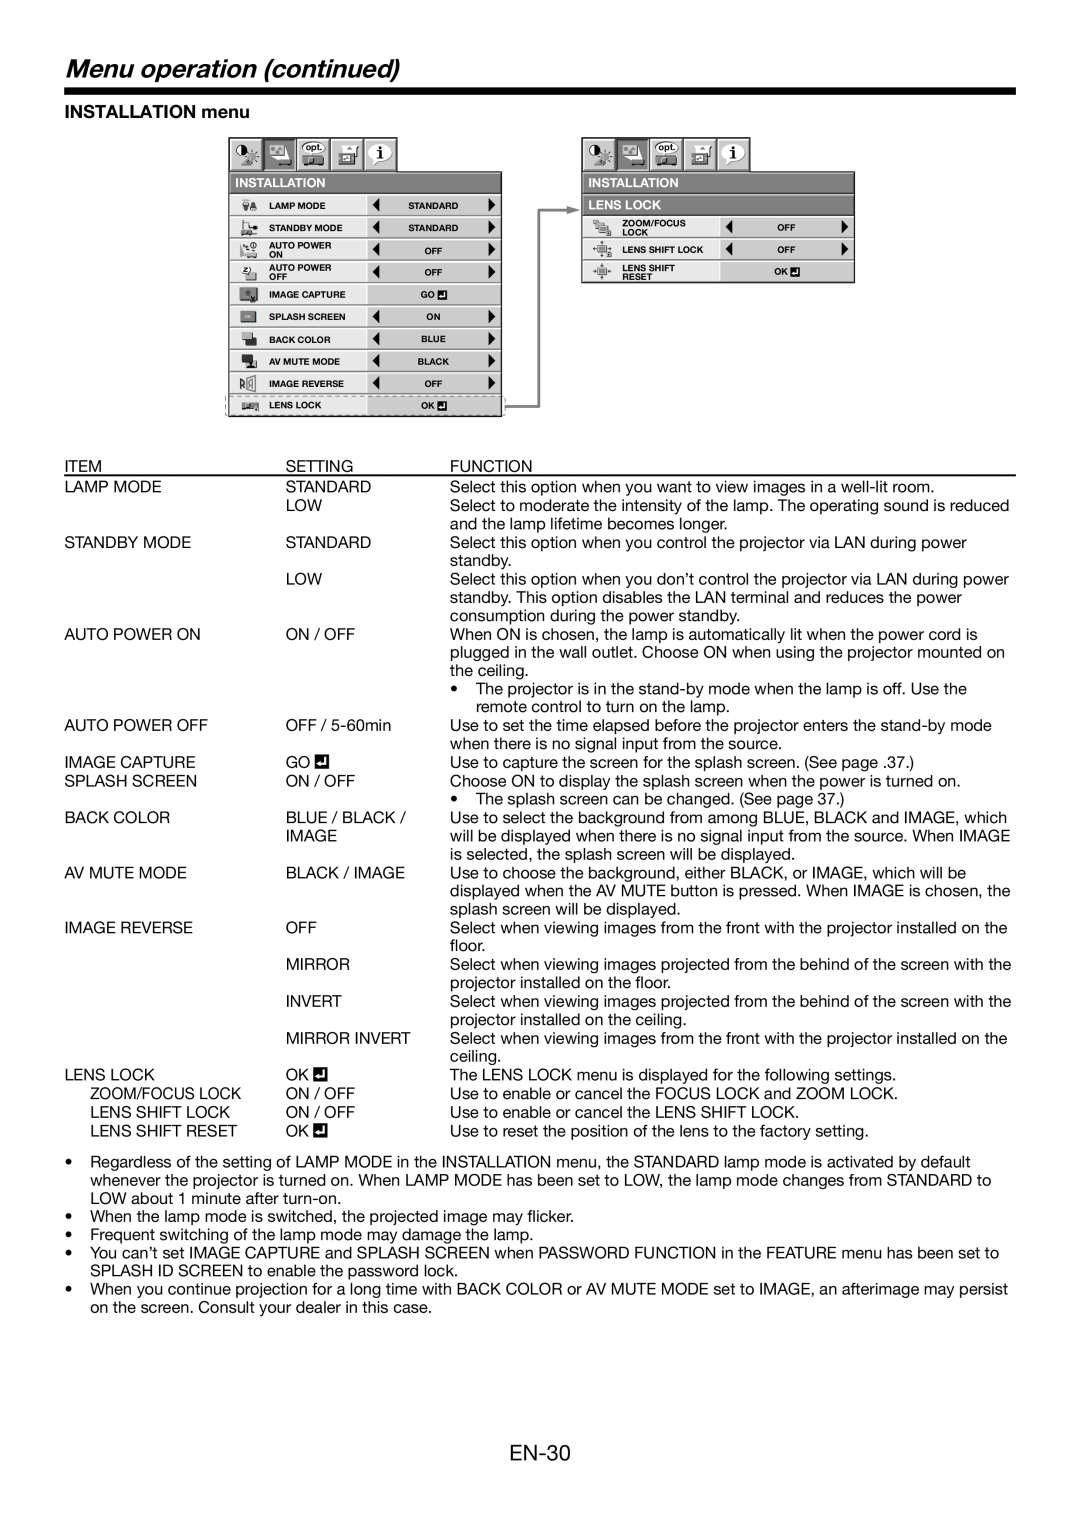 Mitsumi electronic WD3300U user manual Menu operation continued, EN-30, INSTALLATION menu 